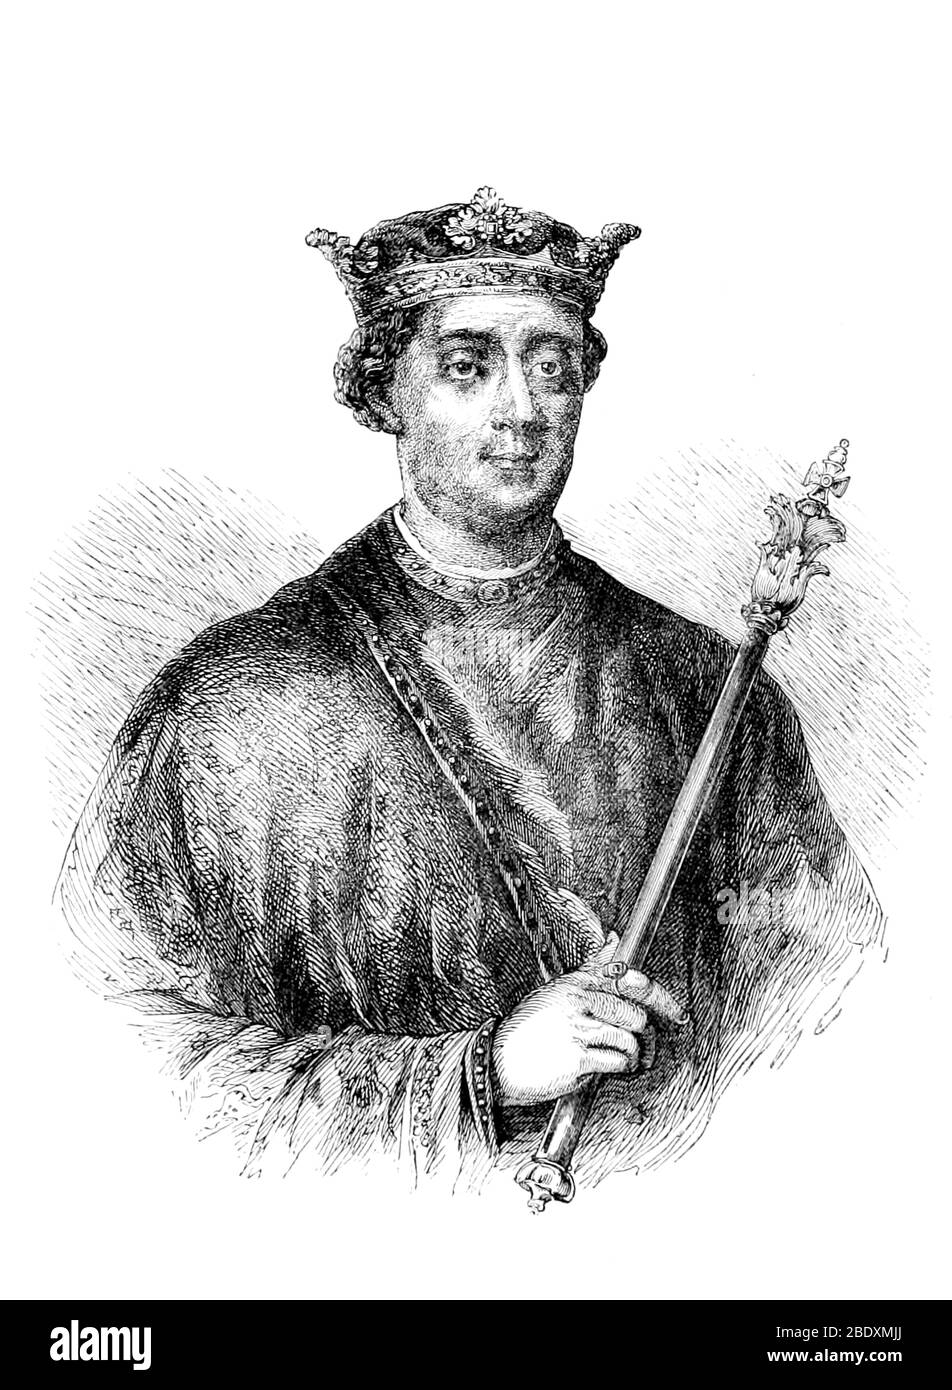 Enrique II, Rey de Inglaterra Foto de stock